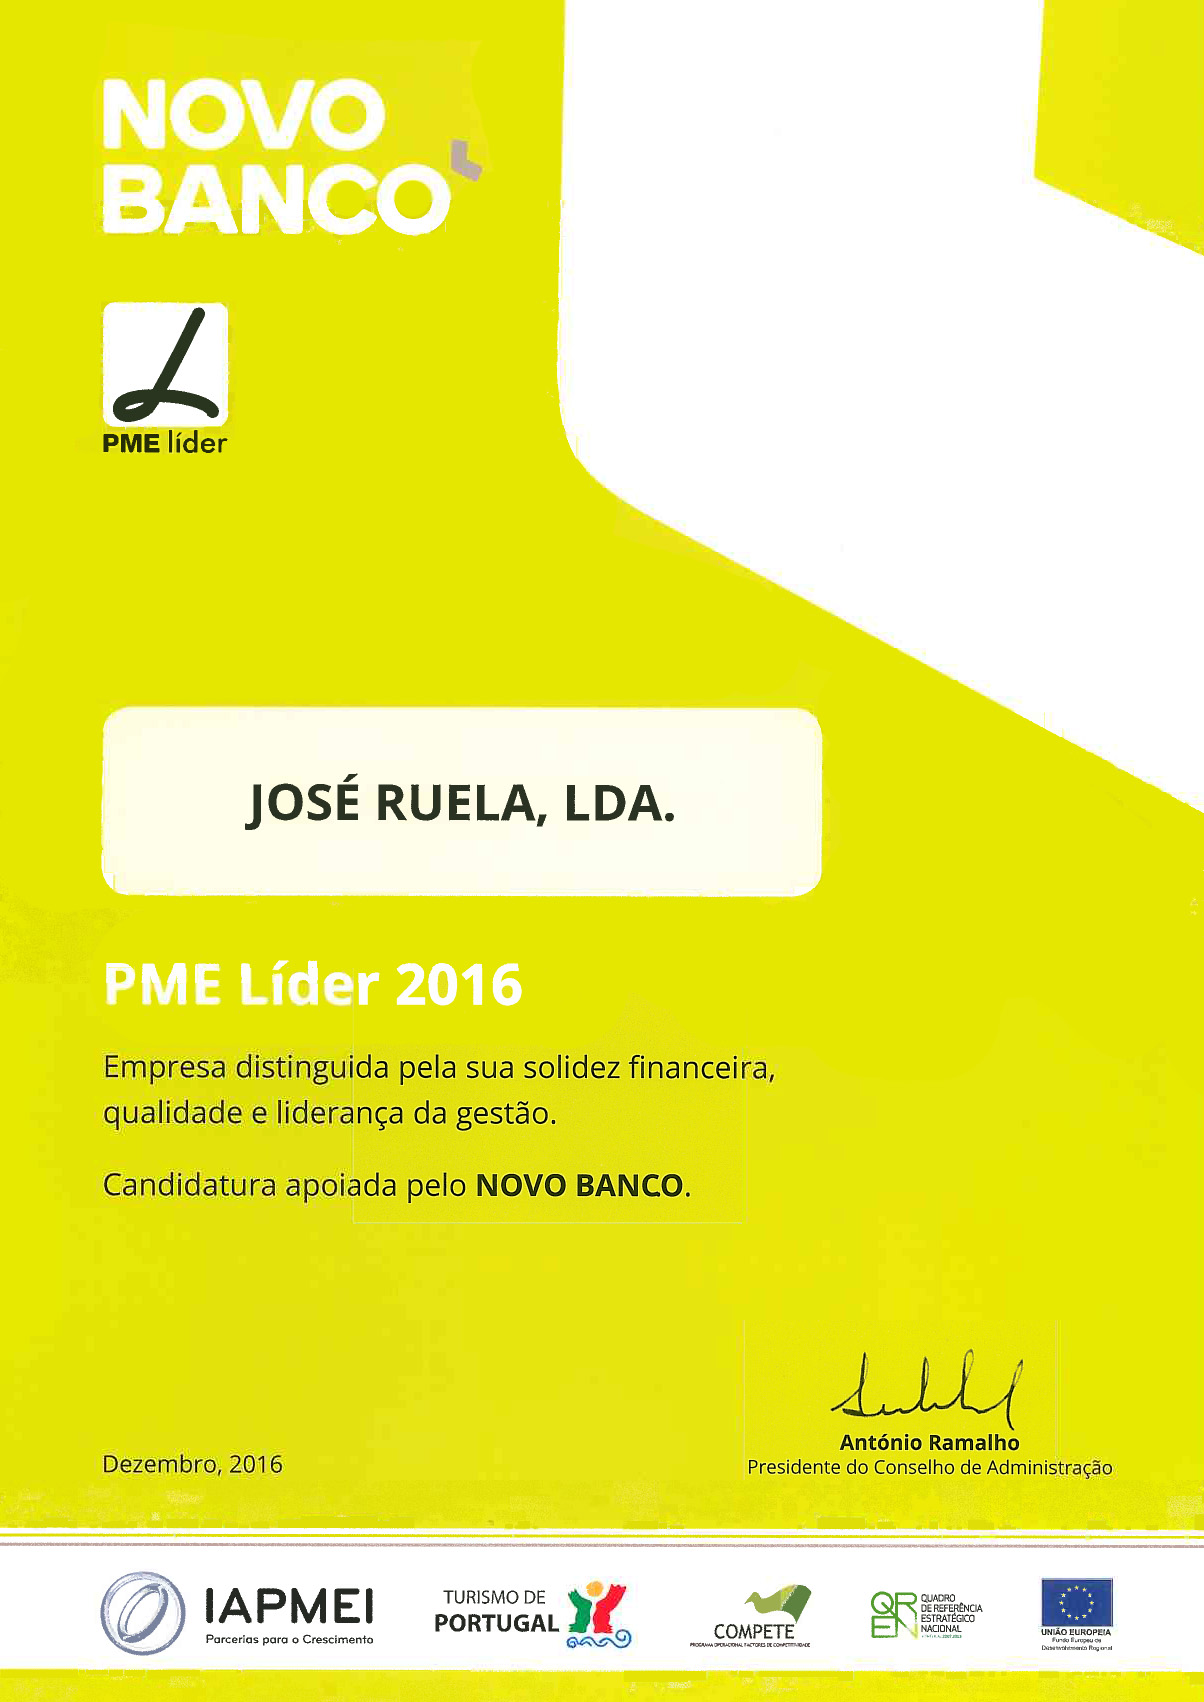 pme-lider-2016-certificacao-joseruela-lda